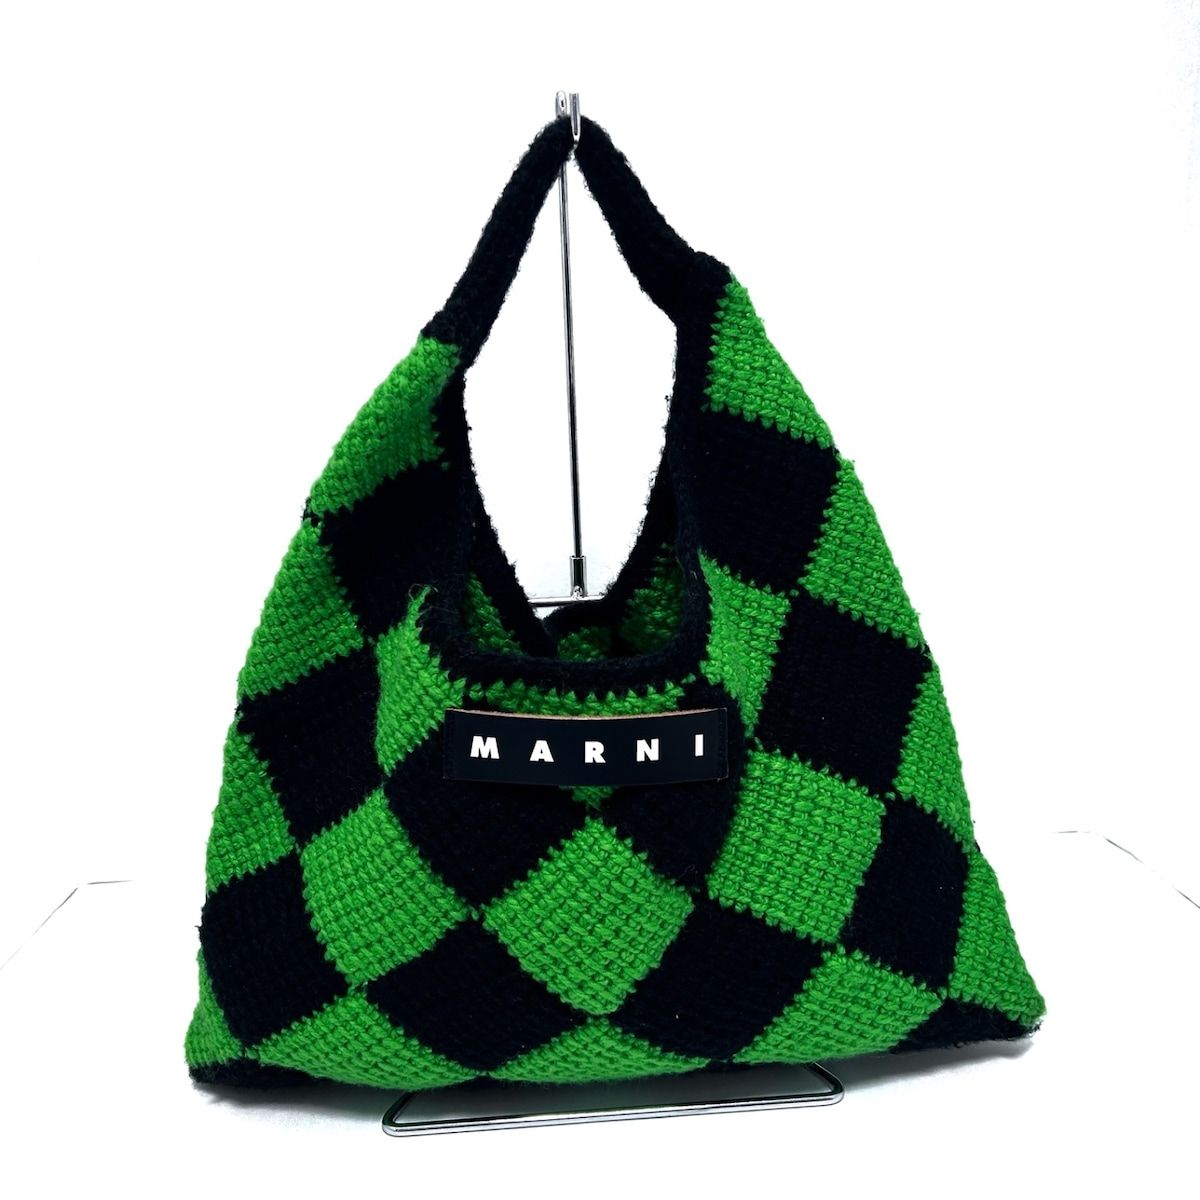 MARNI(マルニ) ショルダーバッグ ダイヤモンド ミディアム バッグ グリーン×黒 マルニマーケット テックウール×レザー - メルカリ